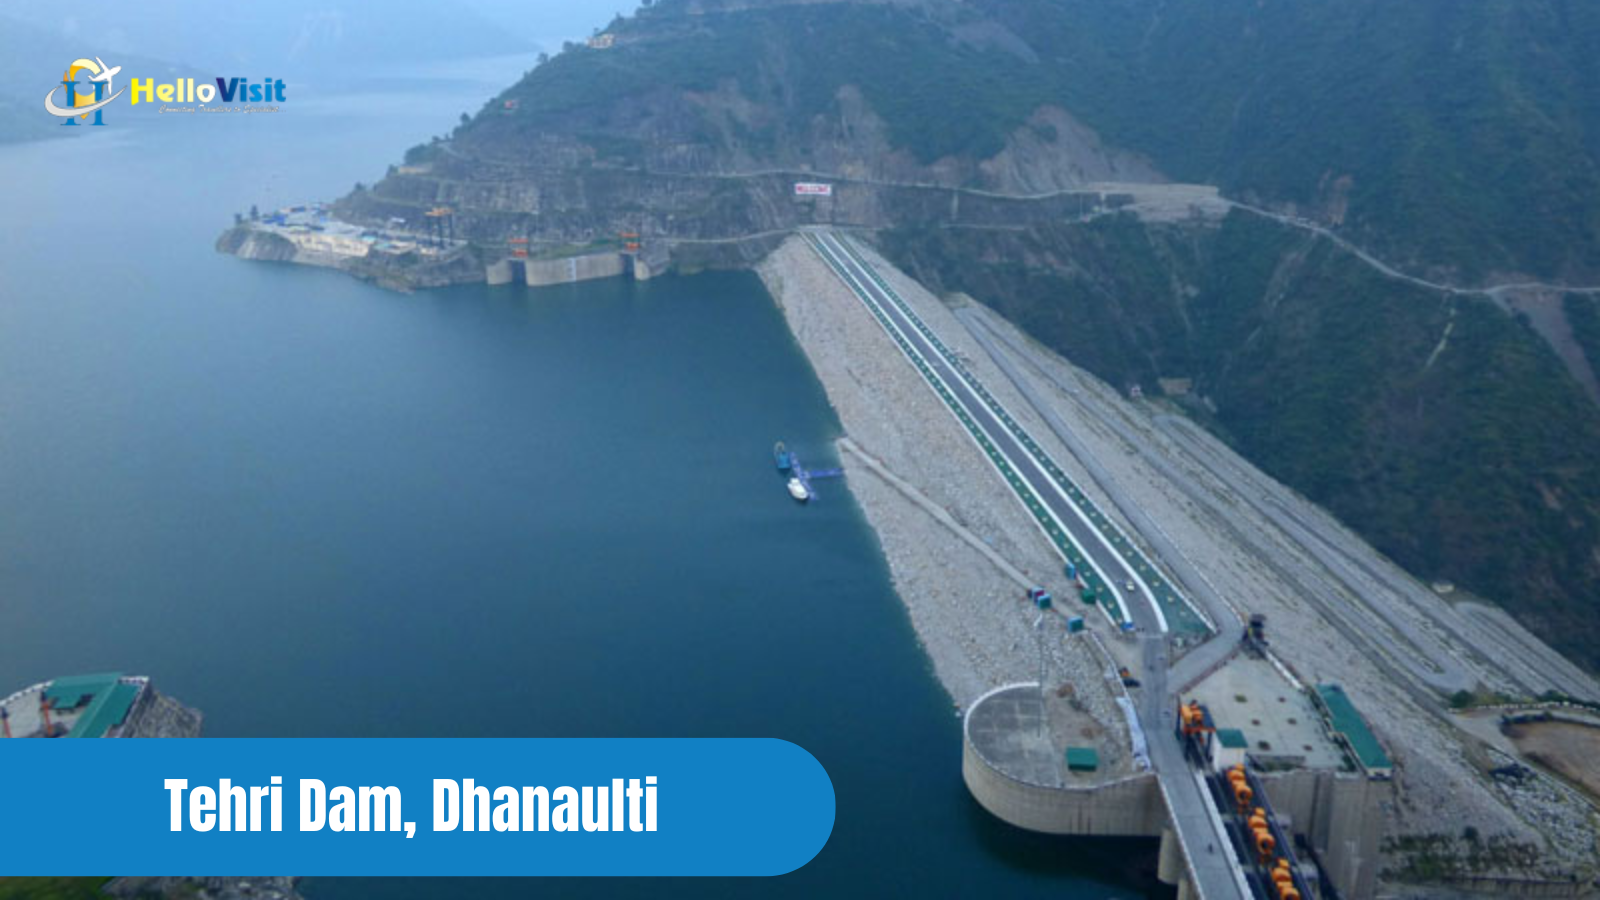 Tehri Dam, Dhanaulti